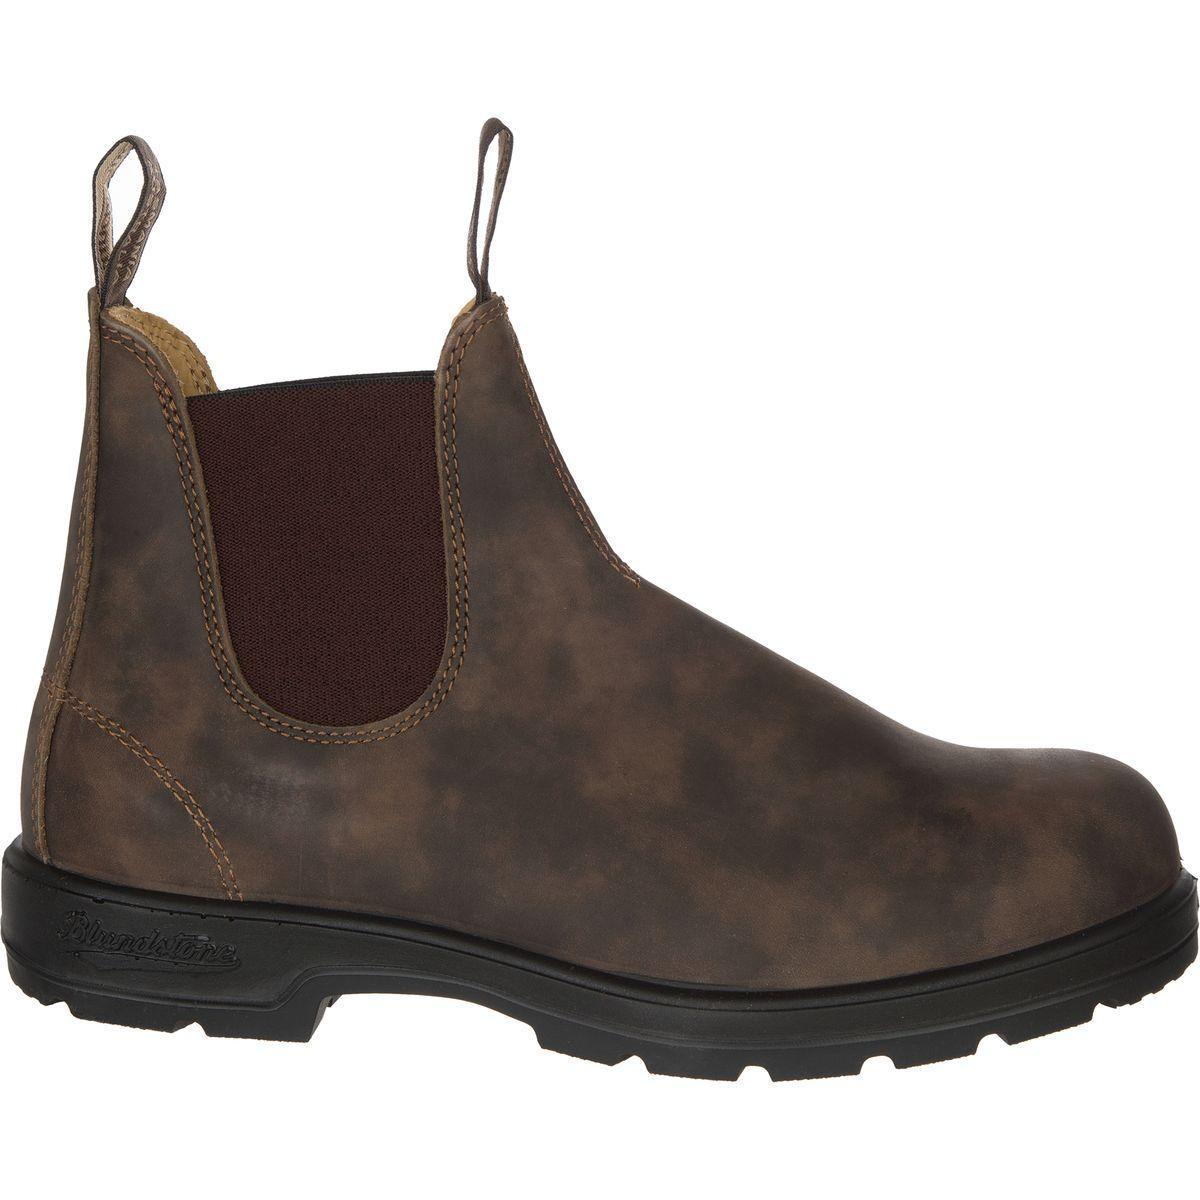 Blundstone Footwear Chelsea Boot Product Image